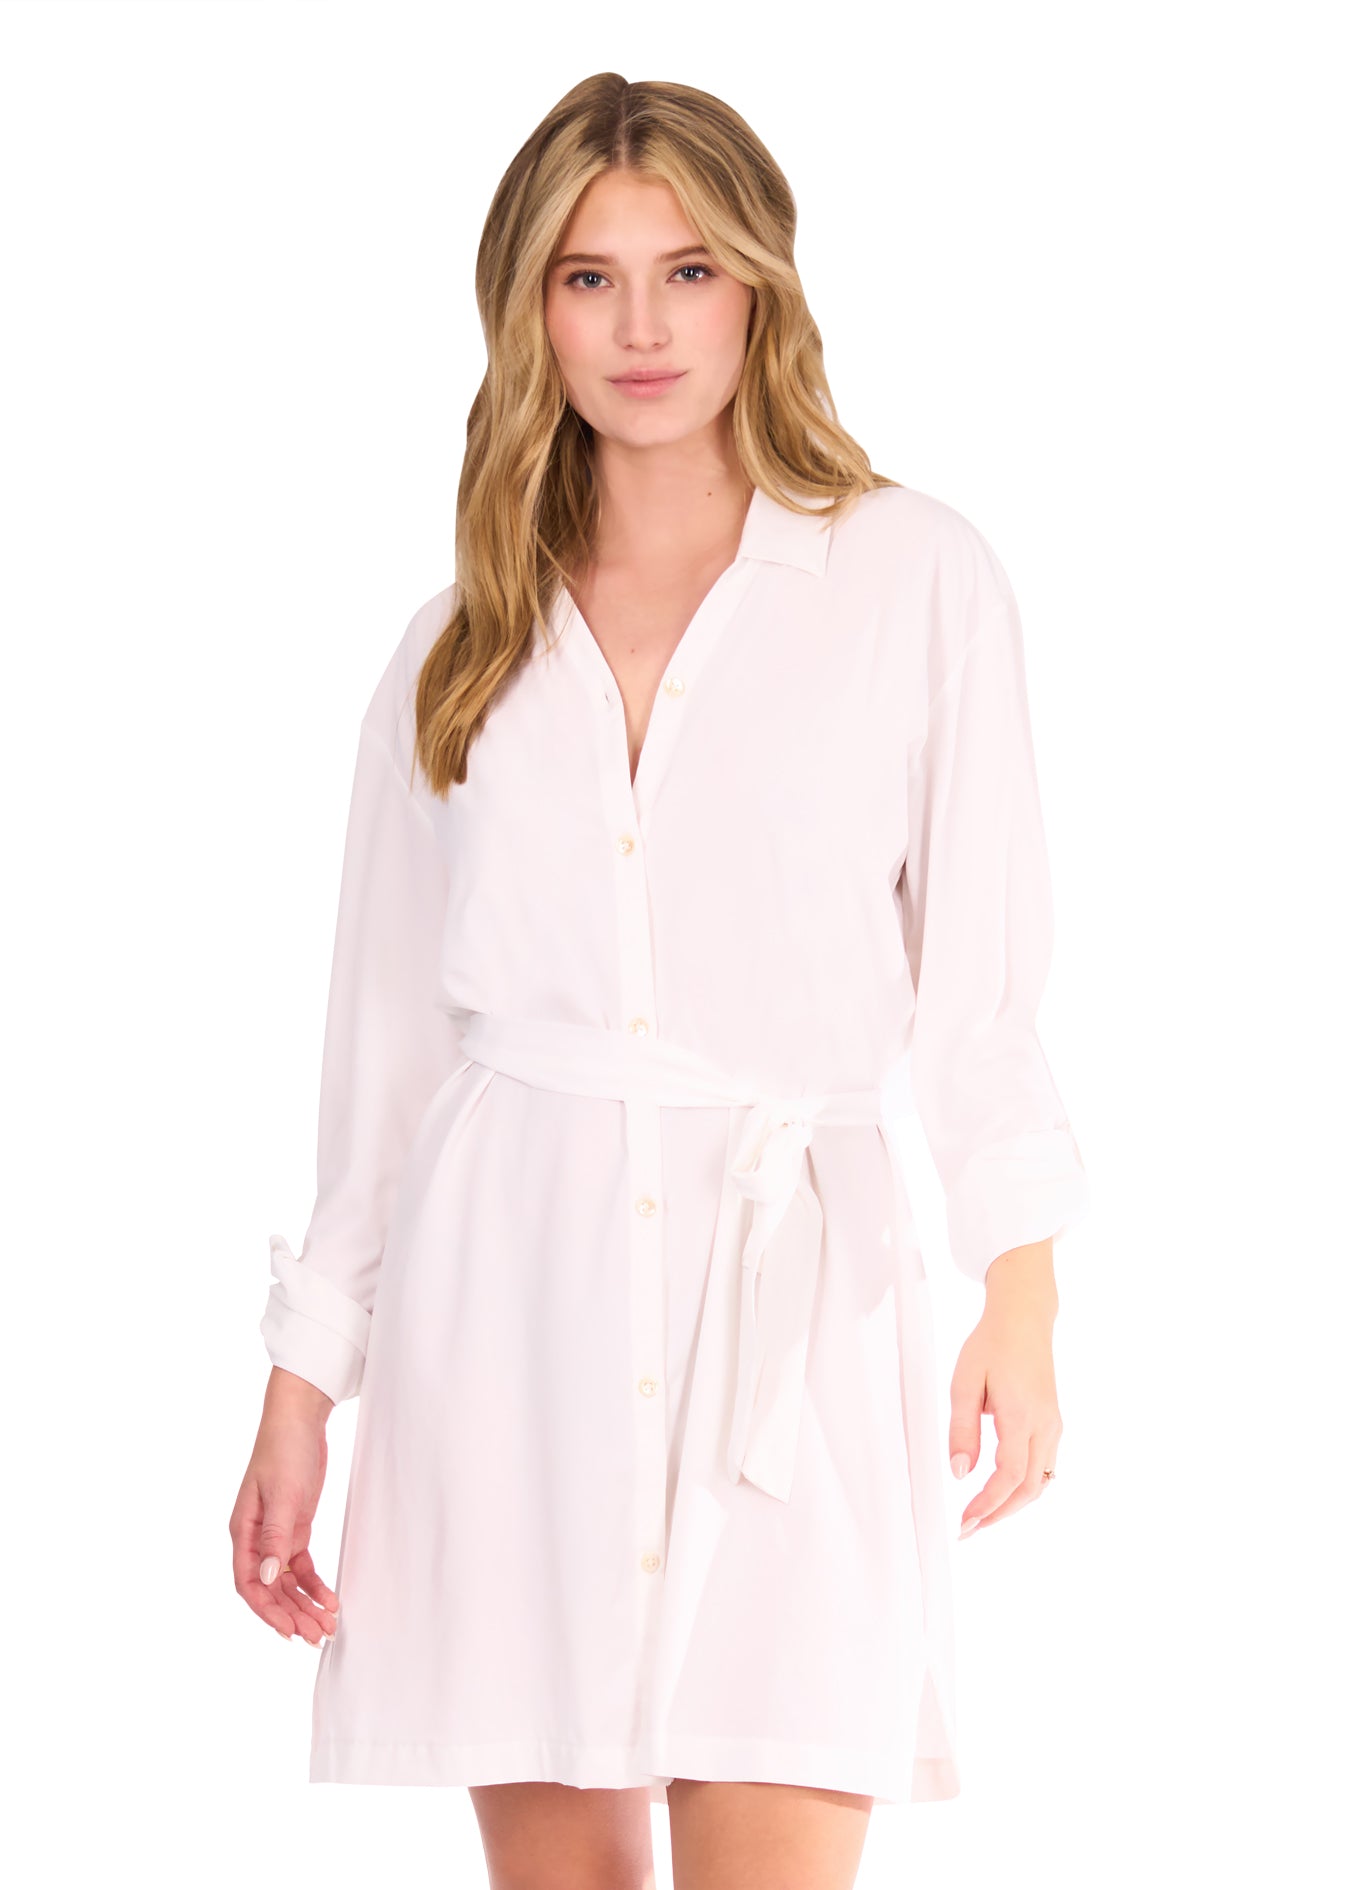 Woman in White Button Down Shirt Dress